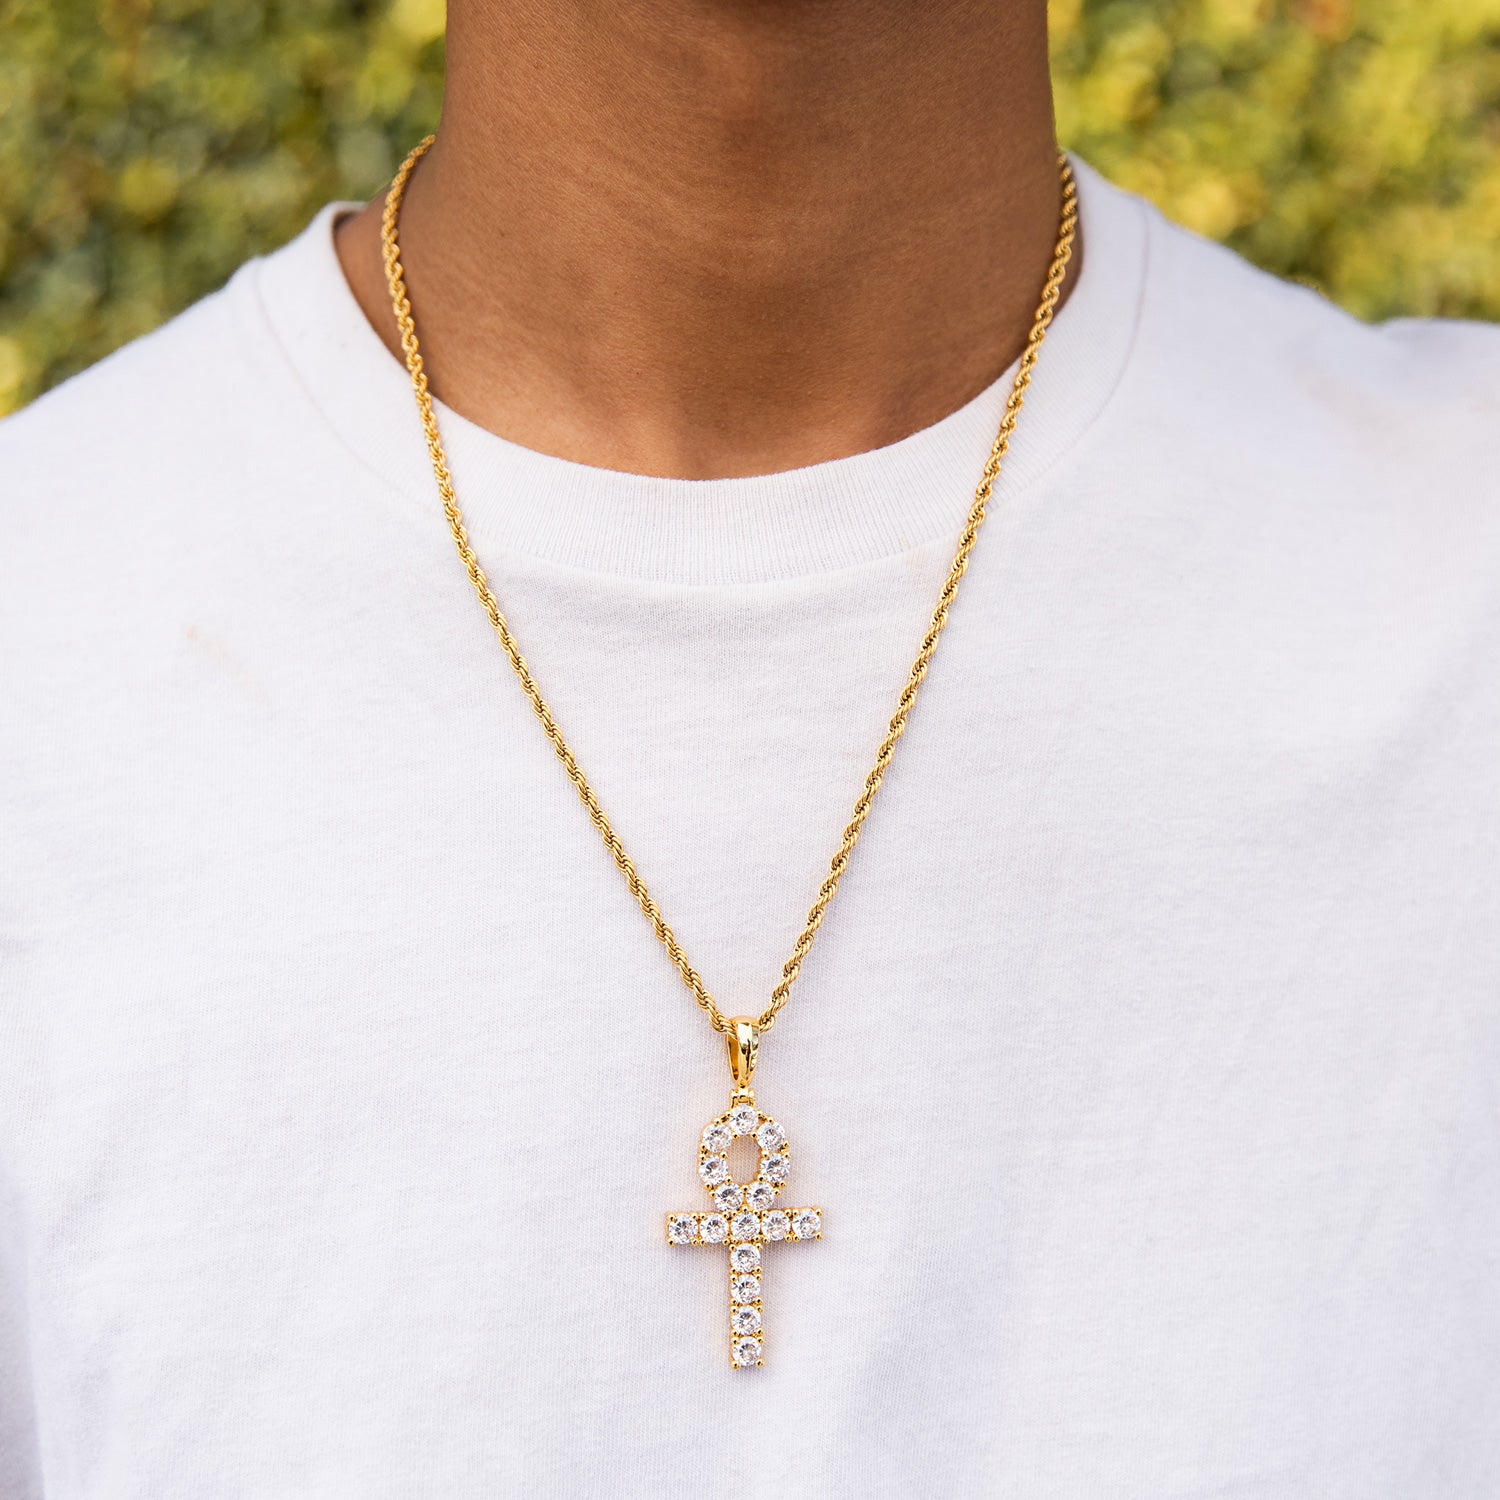 Ankh Cross Eye Of Horus Pendant Necklace In 10K GOLD | eBay